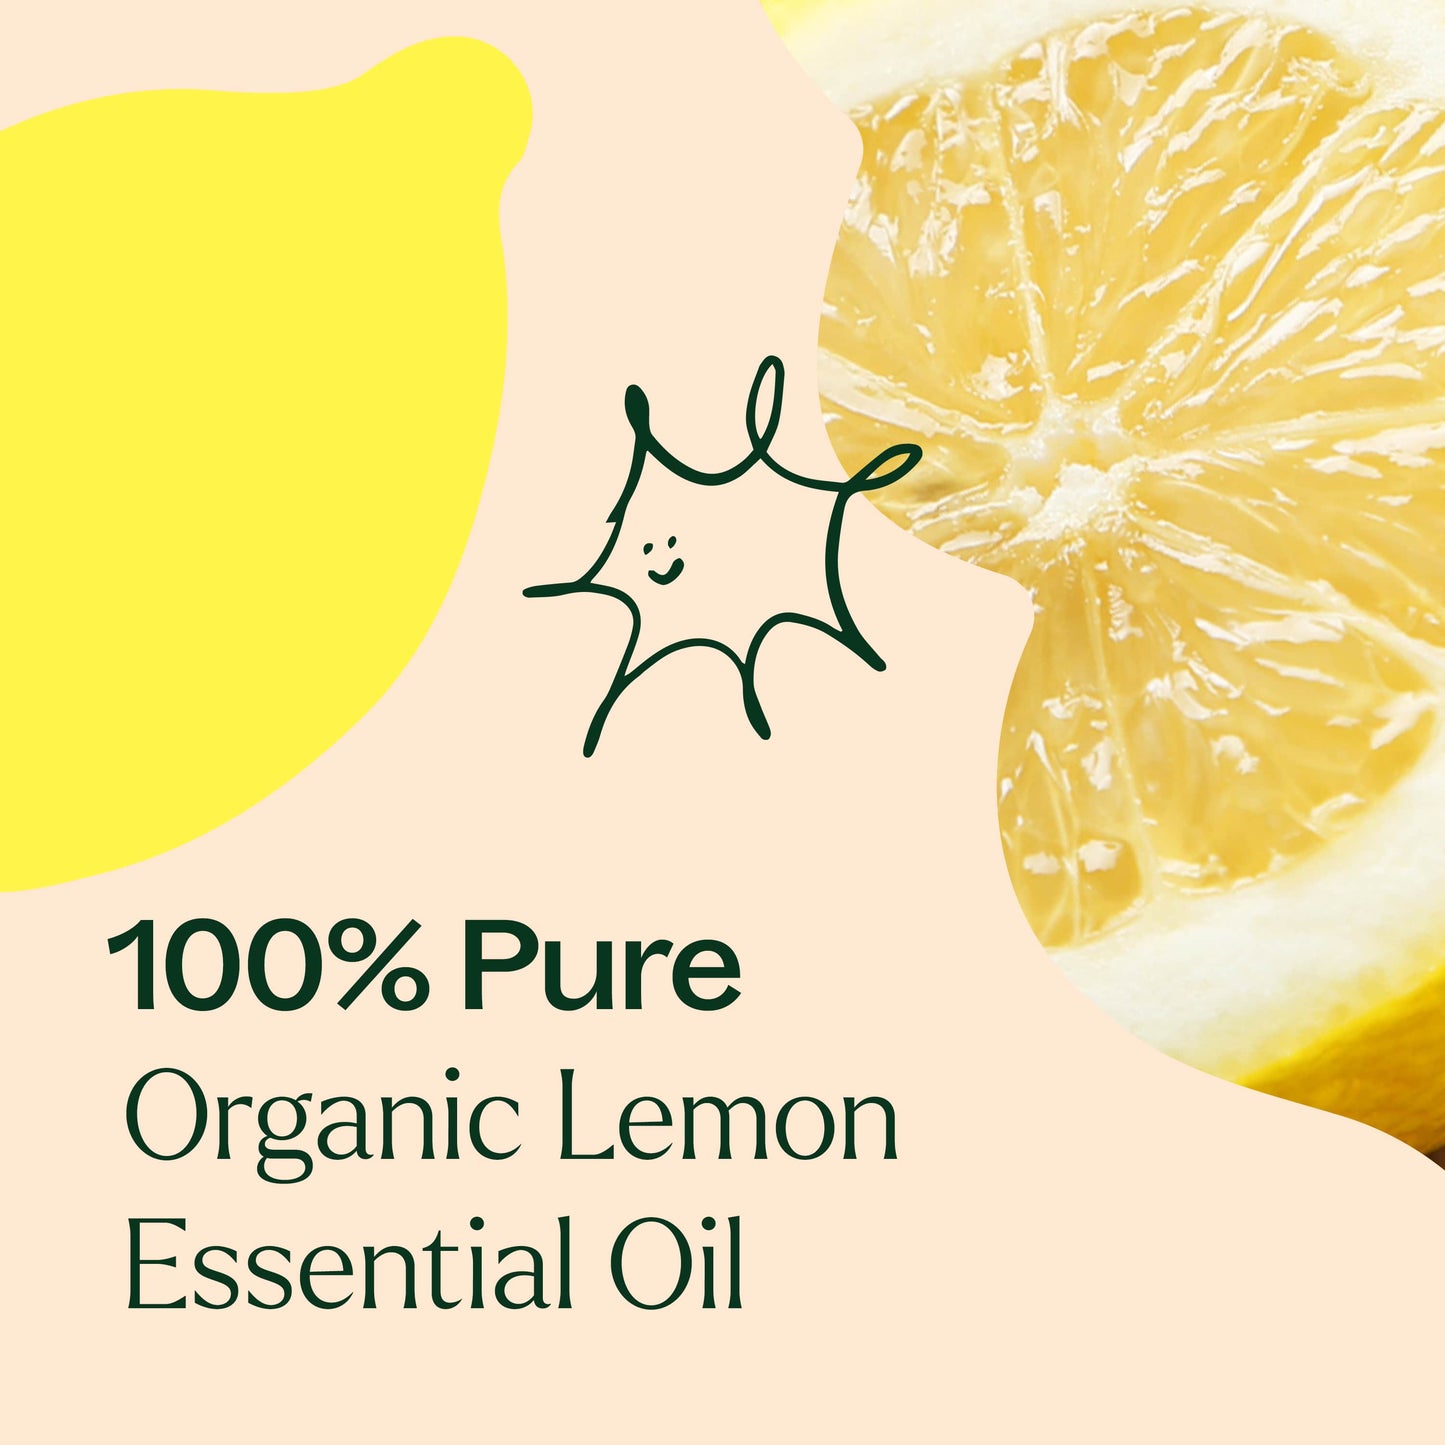 Organic Lemon Essential Oil is 100% pure